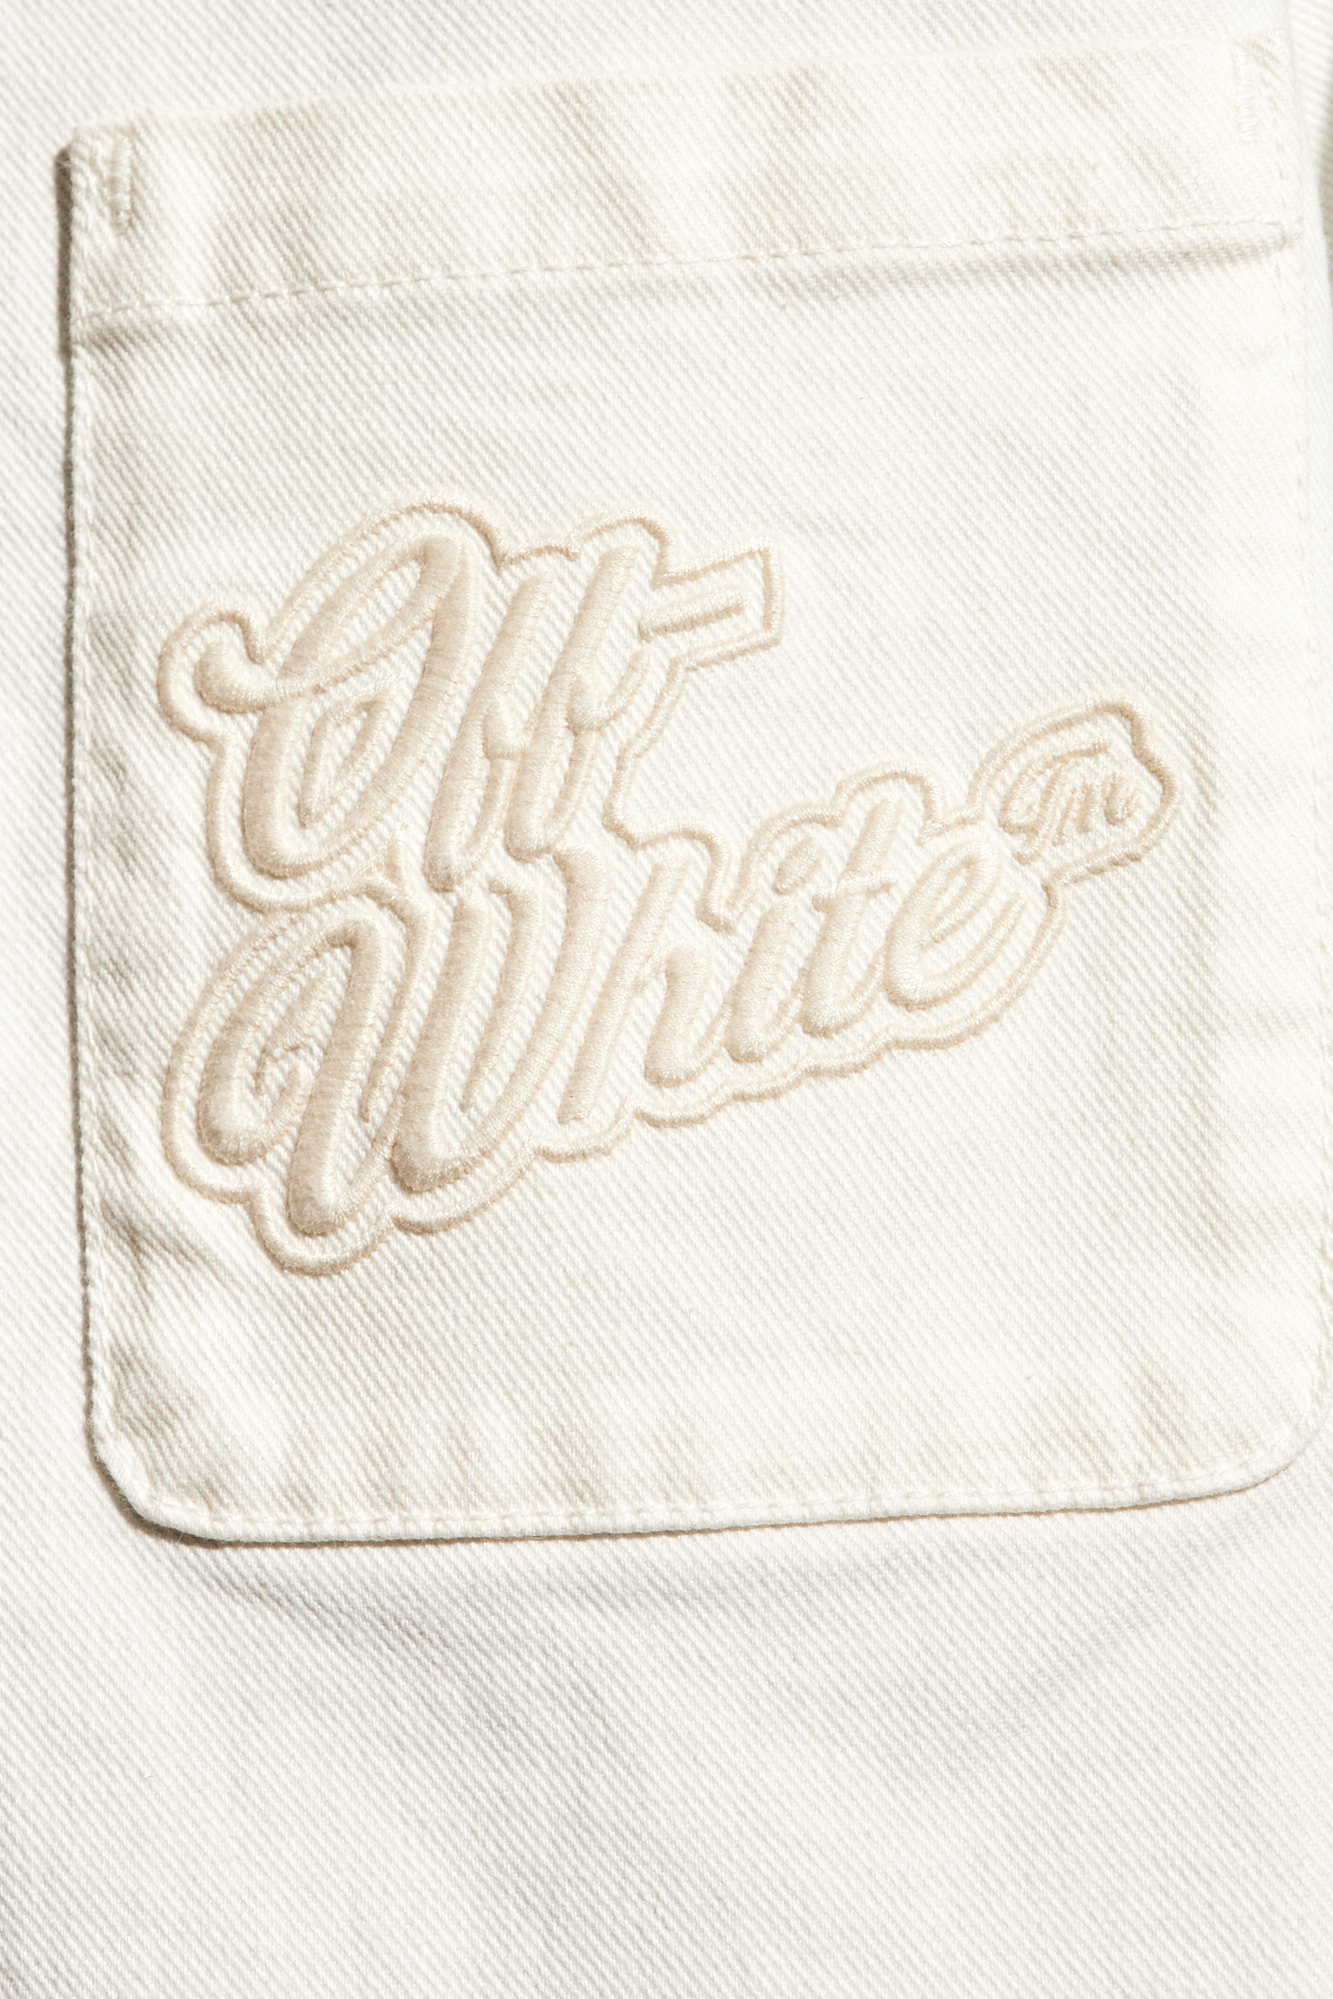 Off-White Denim travis shirt with logo